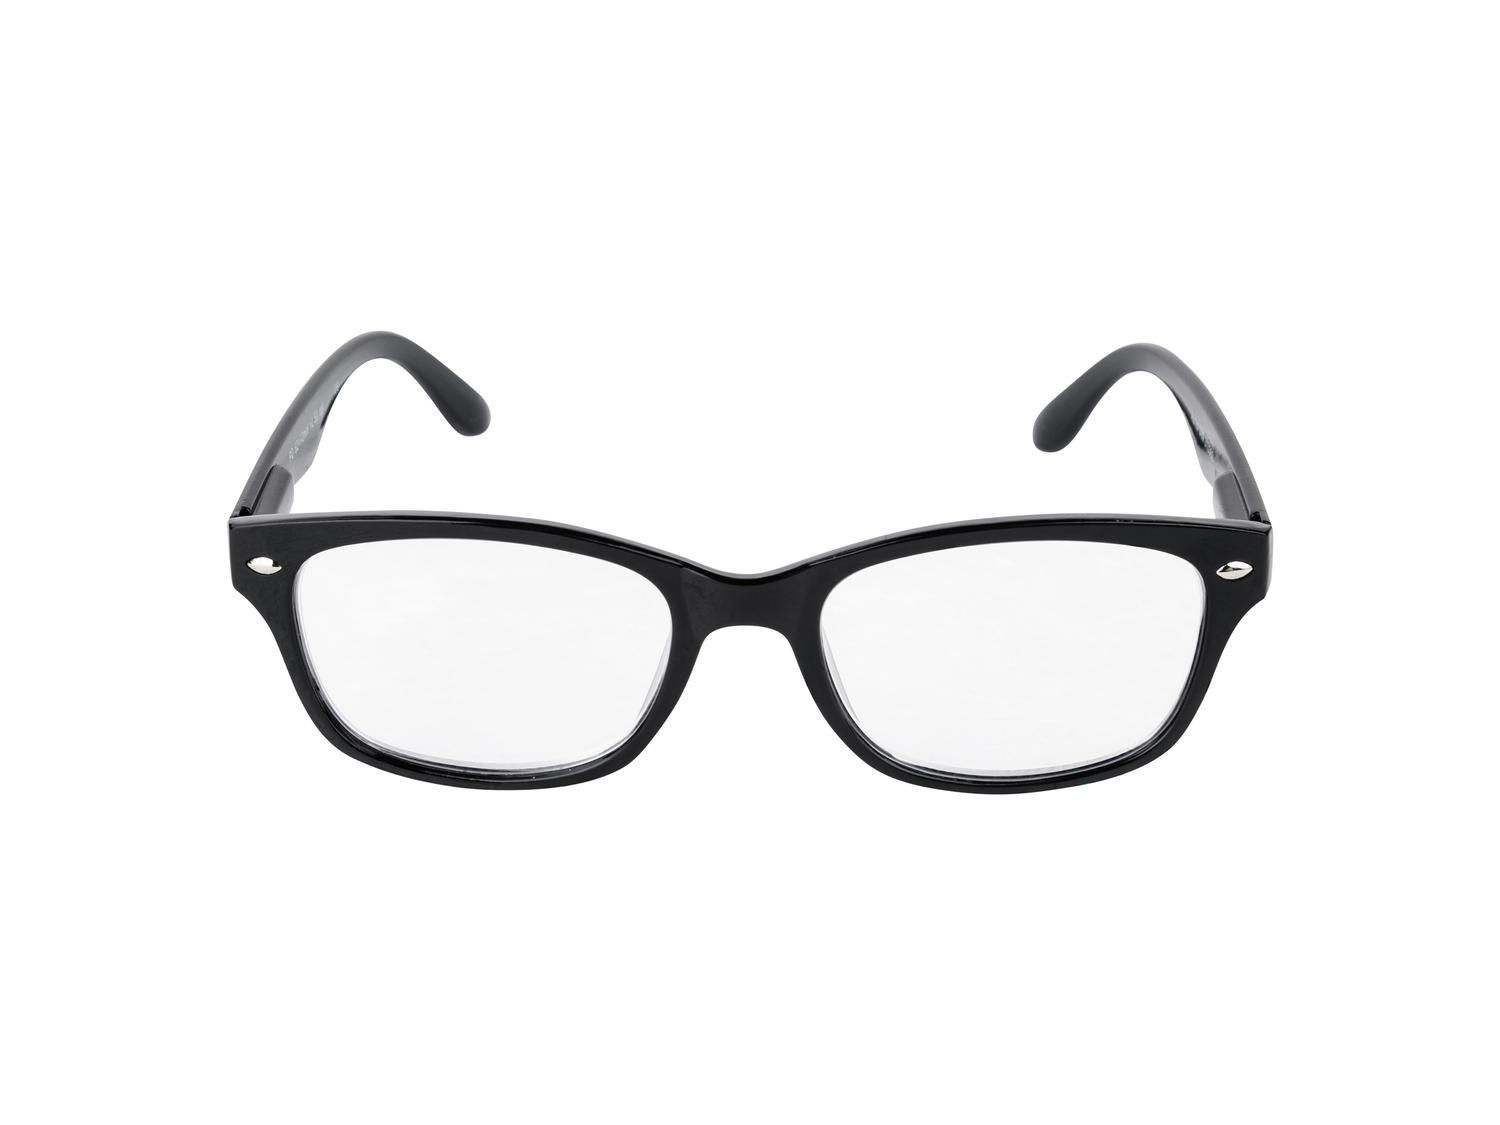 Occhiali da lettura Auriol Eyewear, prezzo 3.99 € 
- Distanza interpupillare: ...